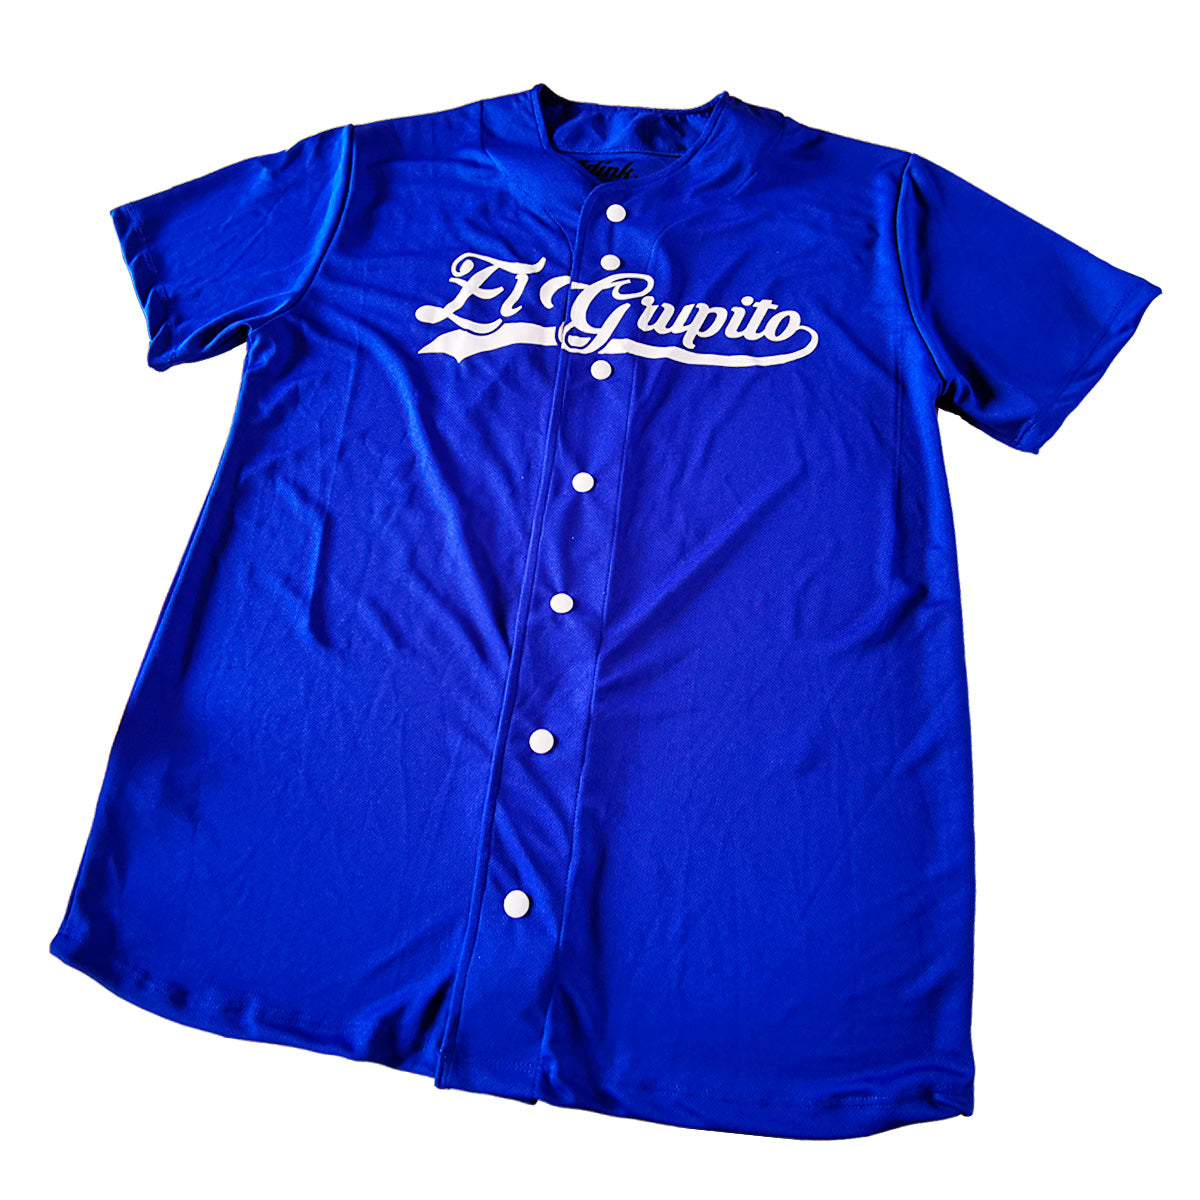 jersey béisbol camisola en guadalajara personalizable azul